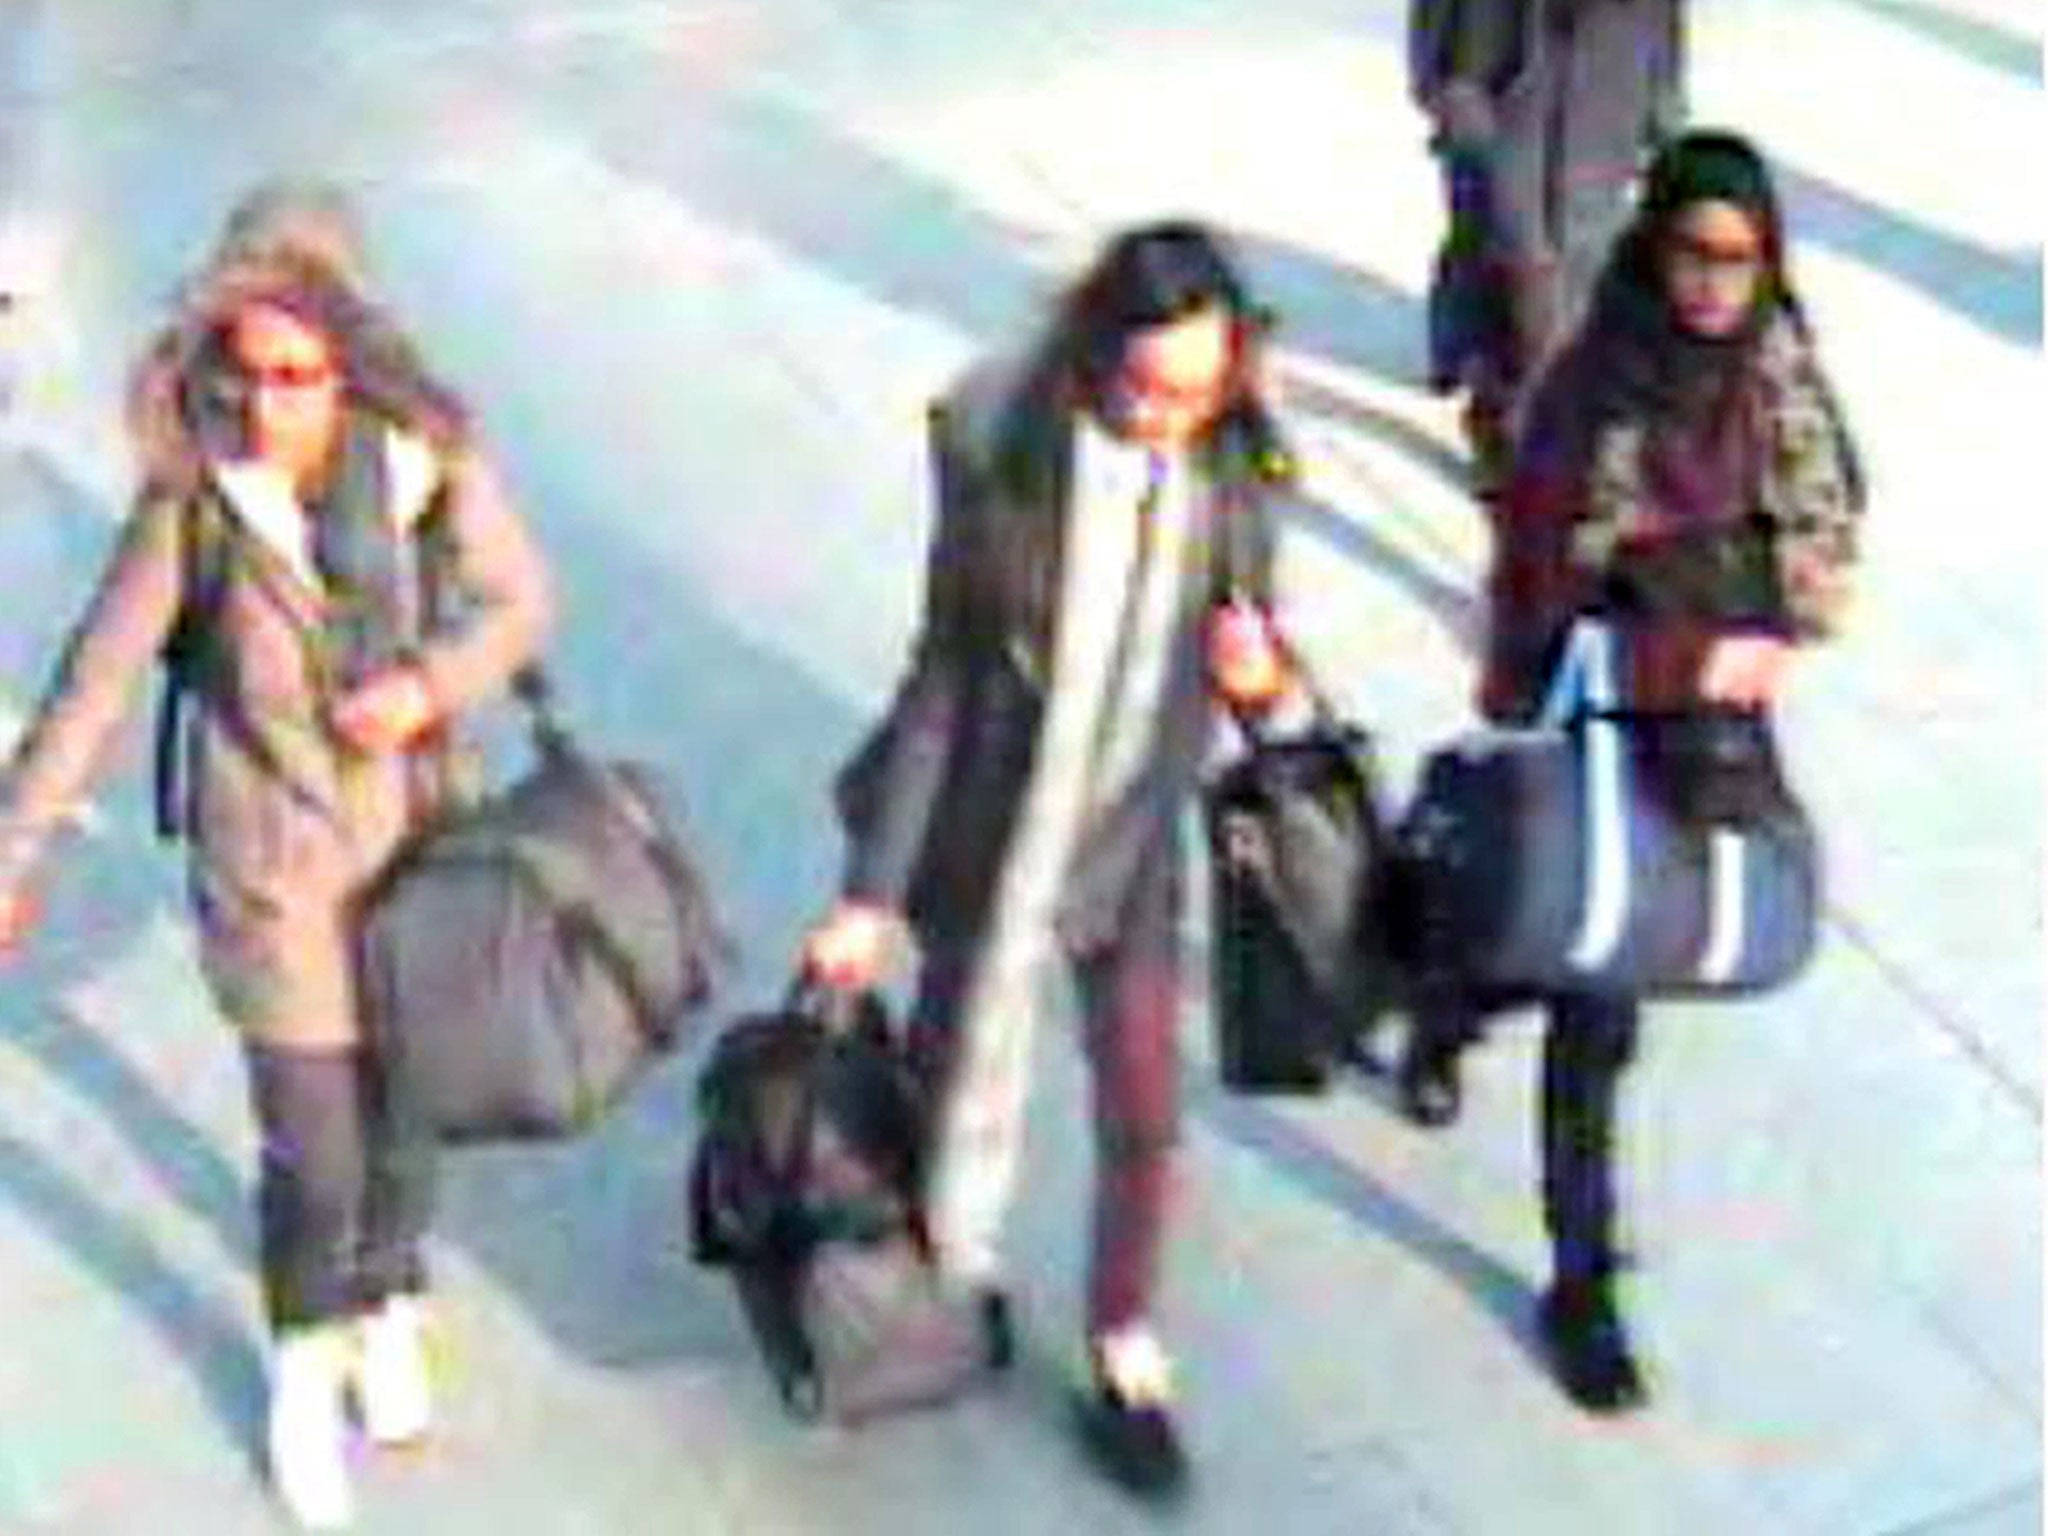 CCTV still of 15-year-old Amira Abase, left, Kadiza Sultana,16, center, and Shamima Begum, 15, walk through Gatwick airport before travelling to Syria